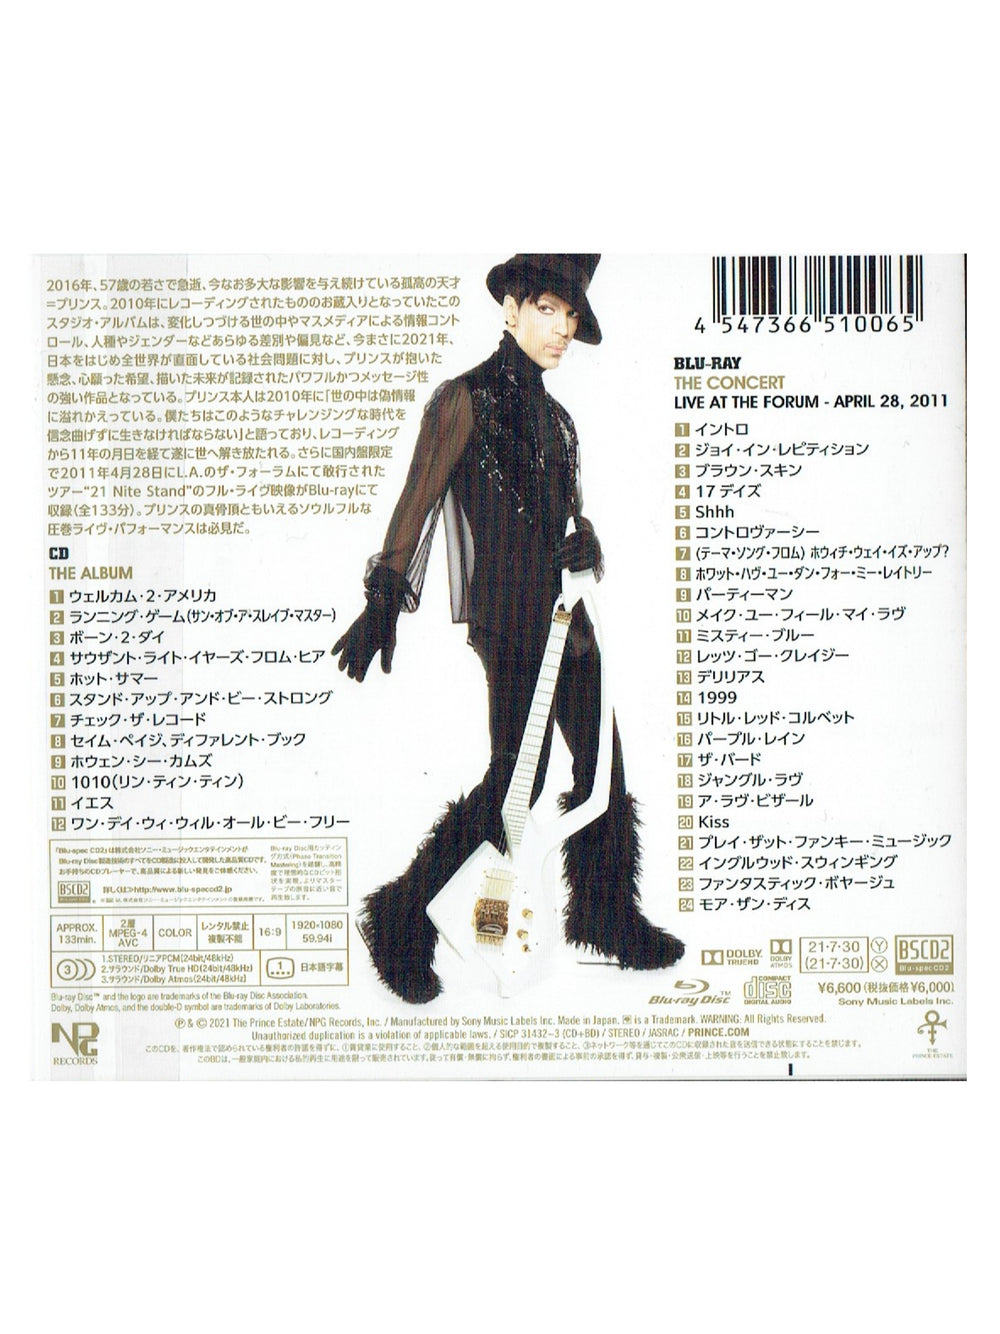 Prince – WELCOME 2 AMERICA JAPAN ONLY BLU SPEC2 CD ALBUM & BLU RAY LTD ED